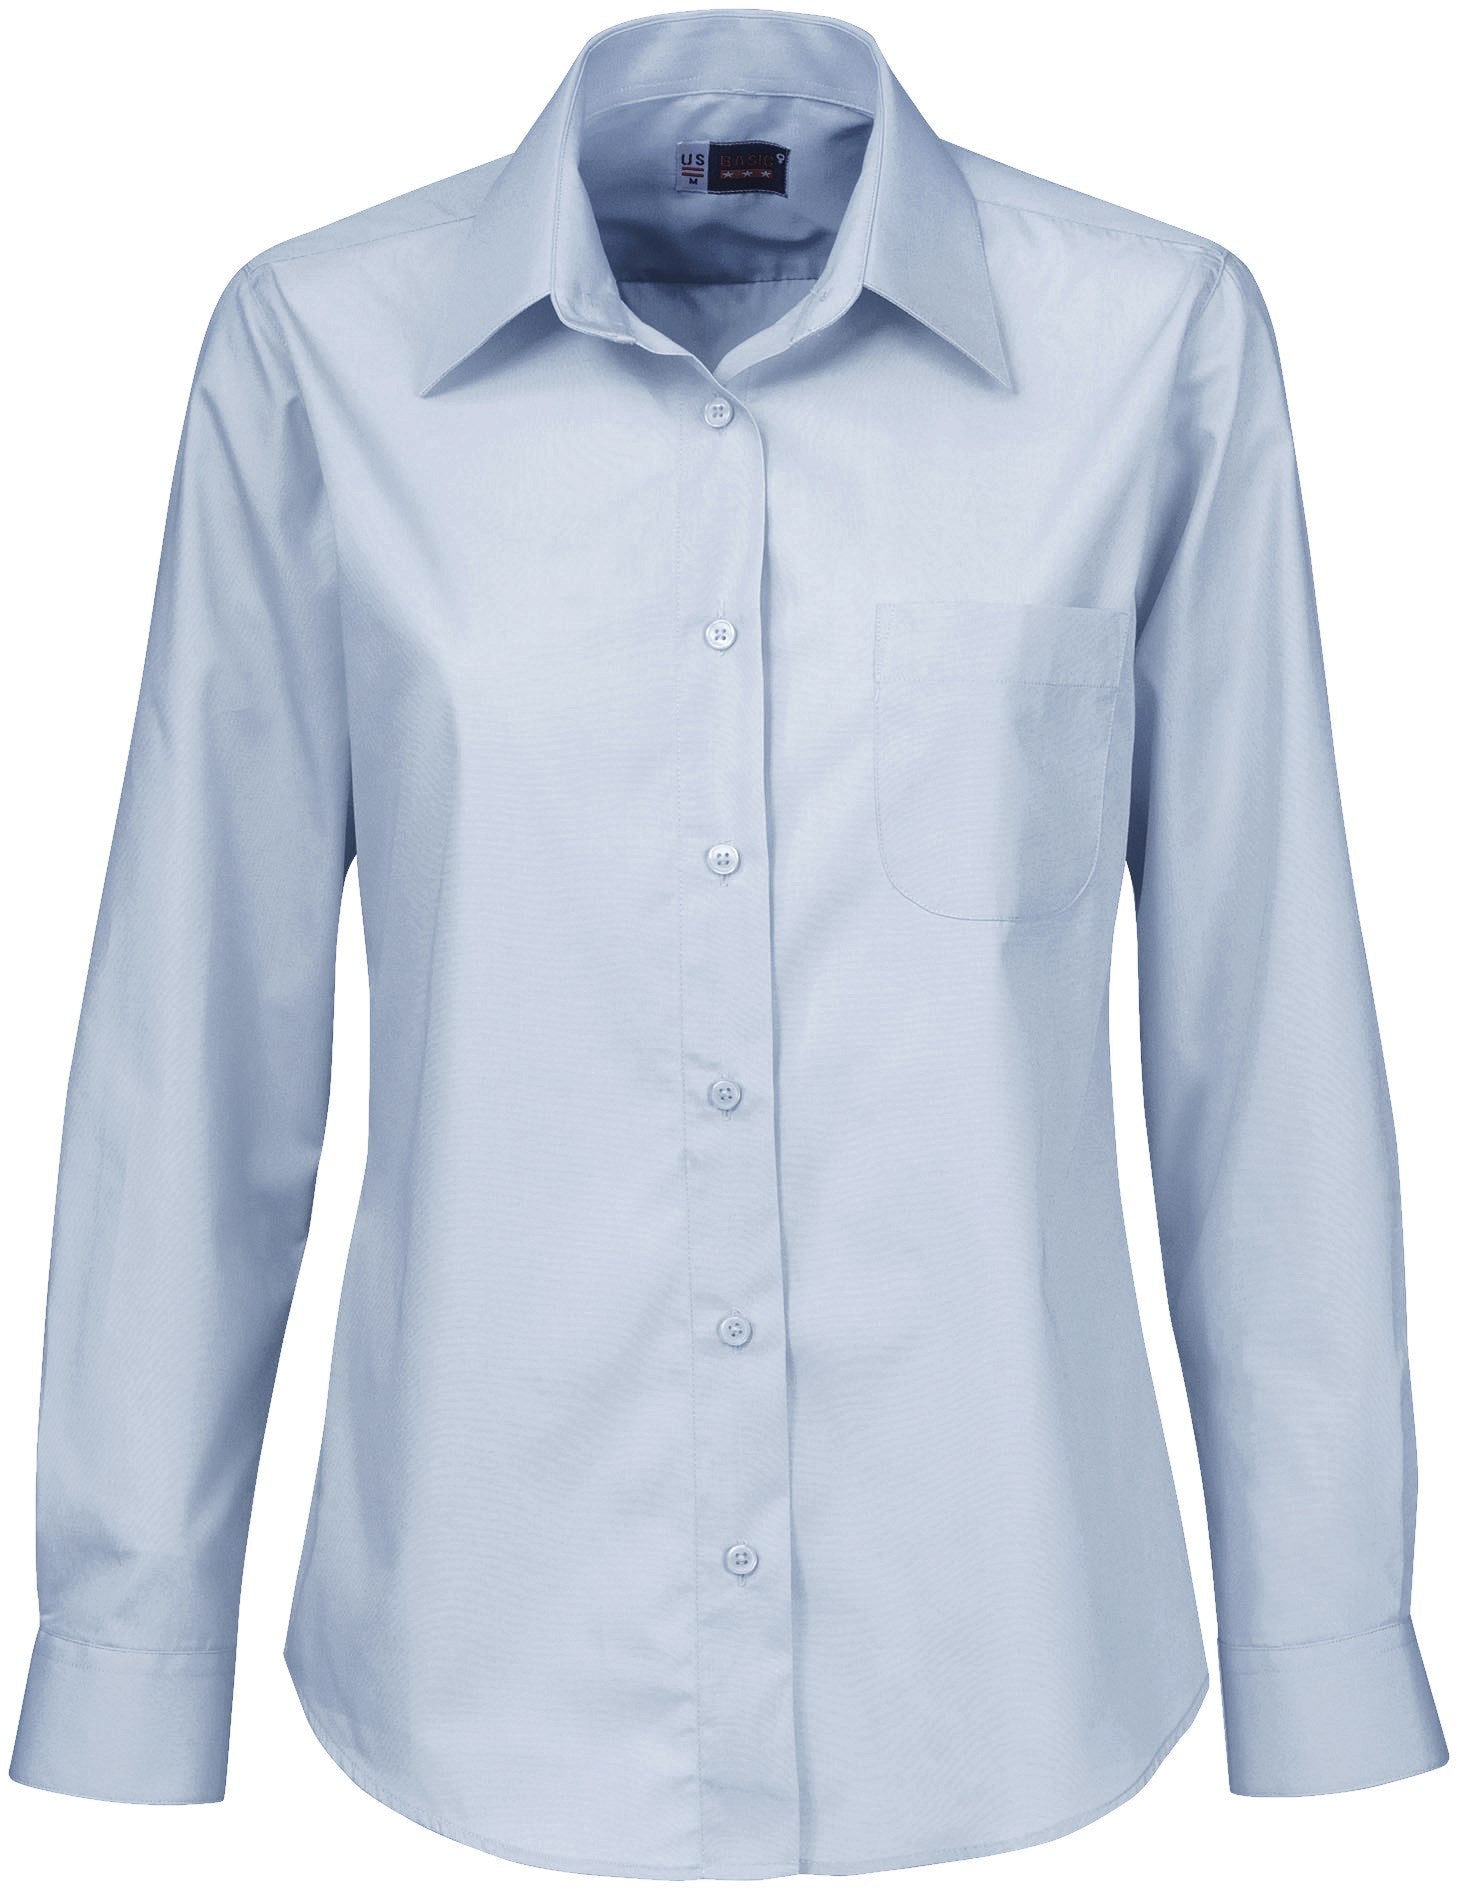 Ladies Long Sleeve Washington Shirt - Blue Only-L-Blue-BU